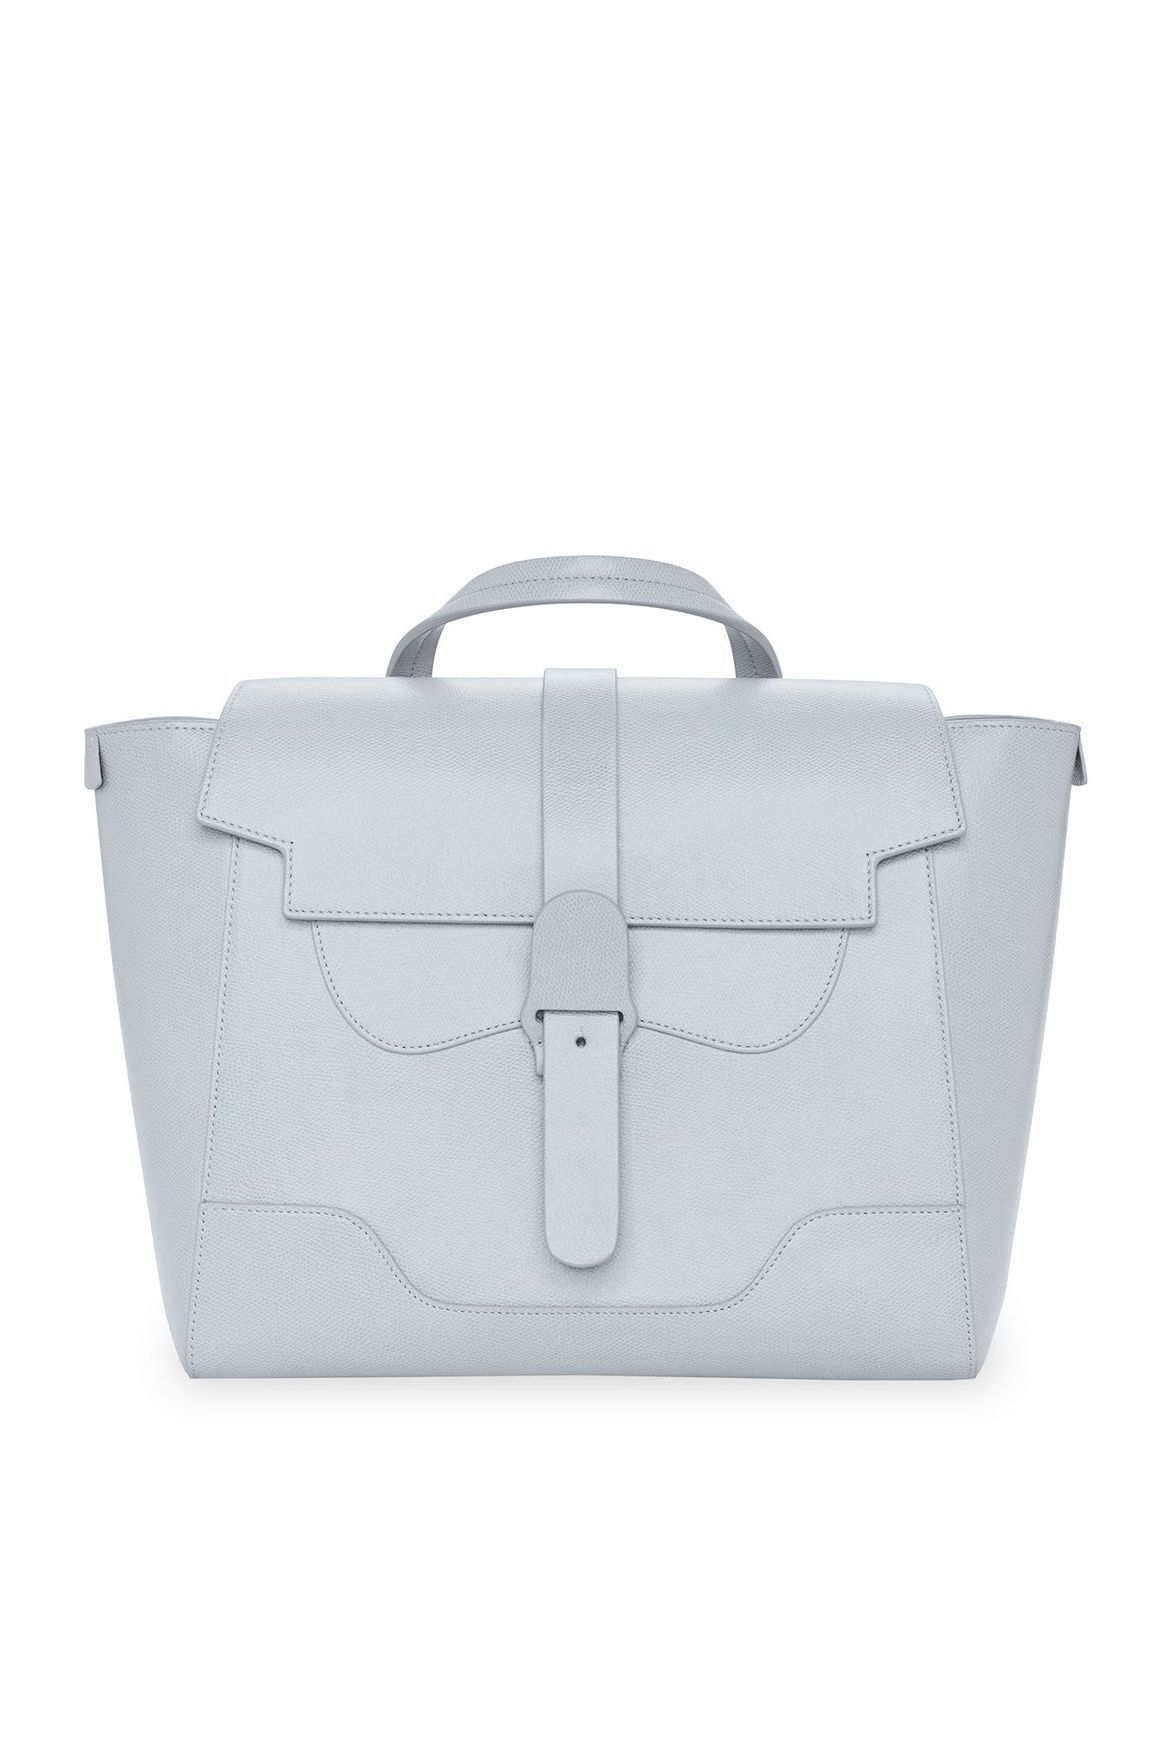 designer handbags that fit laptops